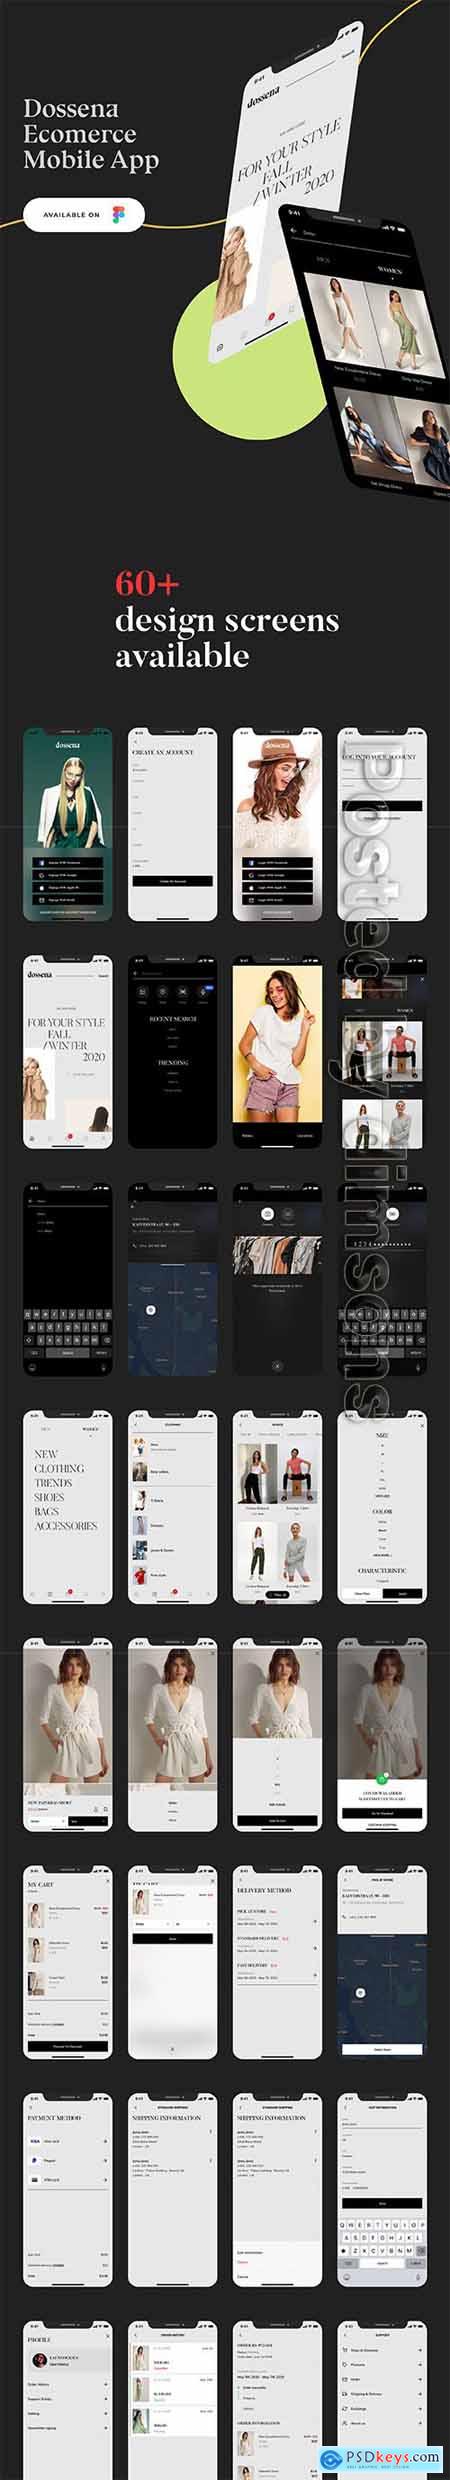 Dossena - fashion mobile application